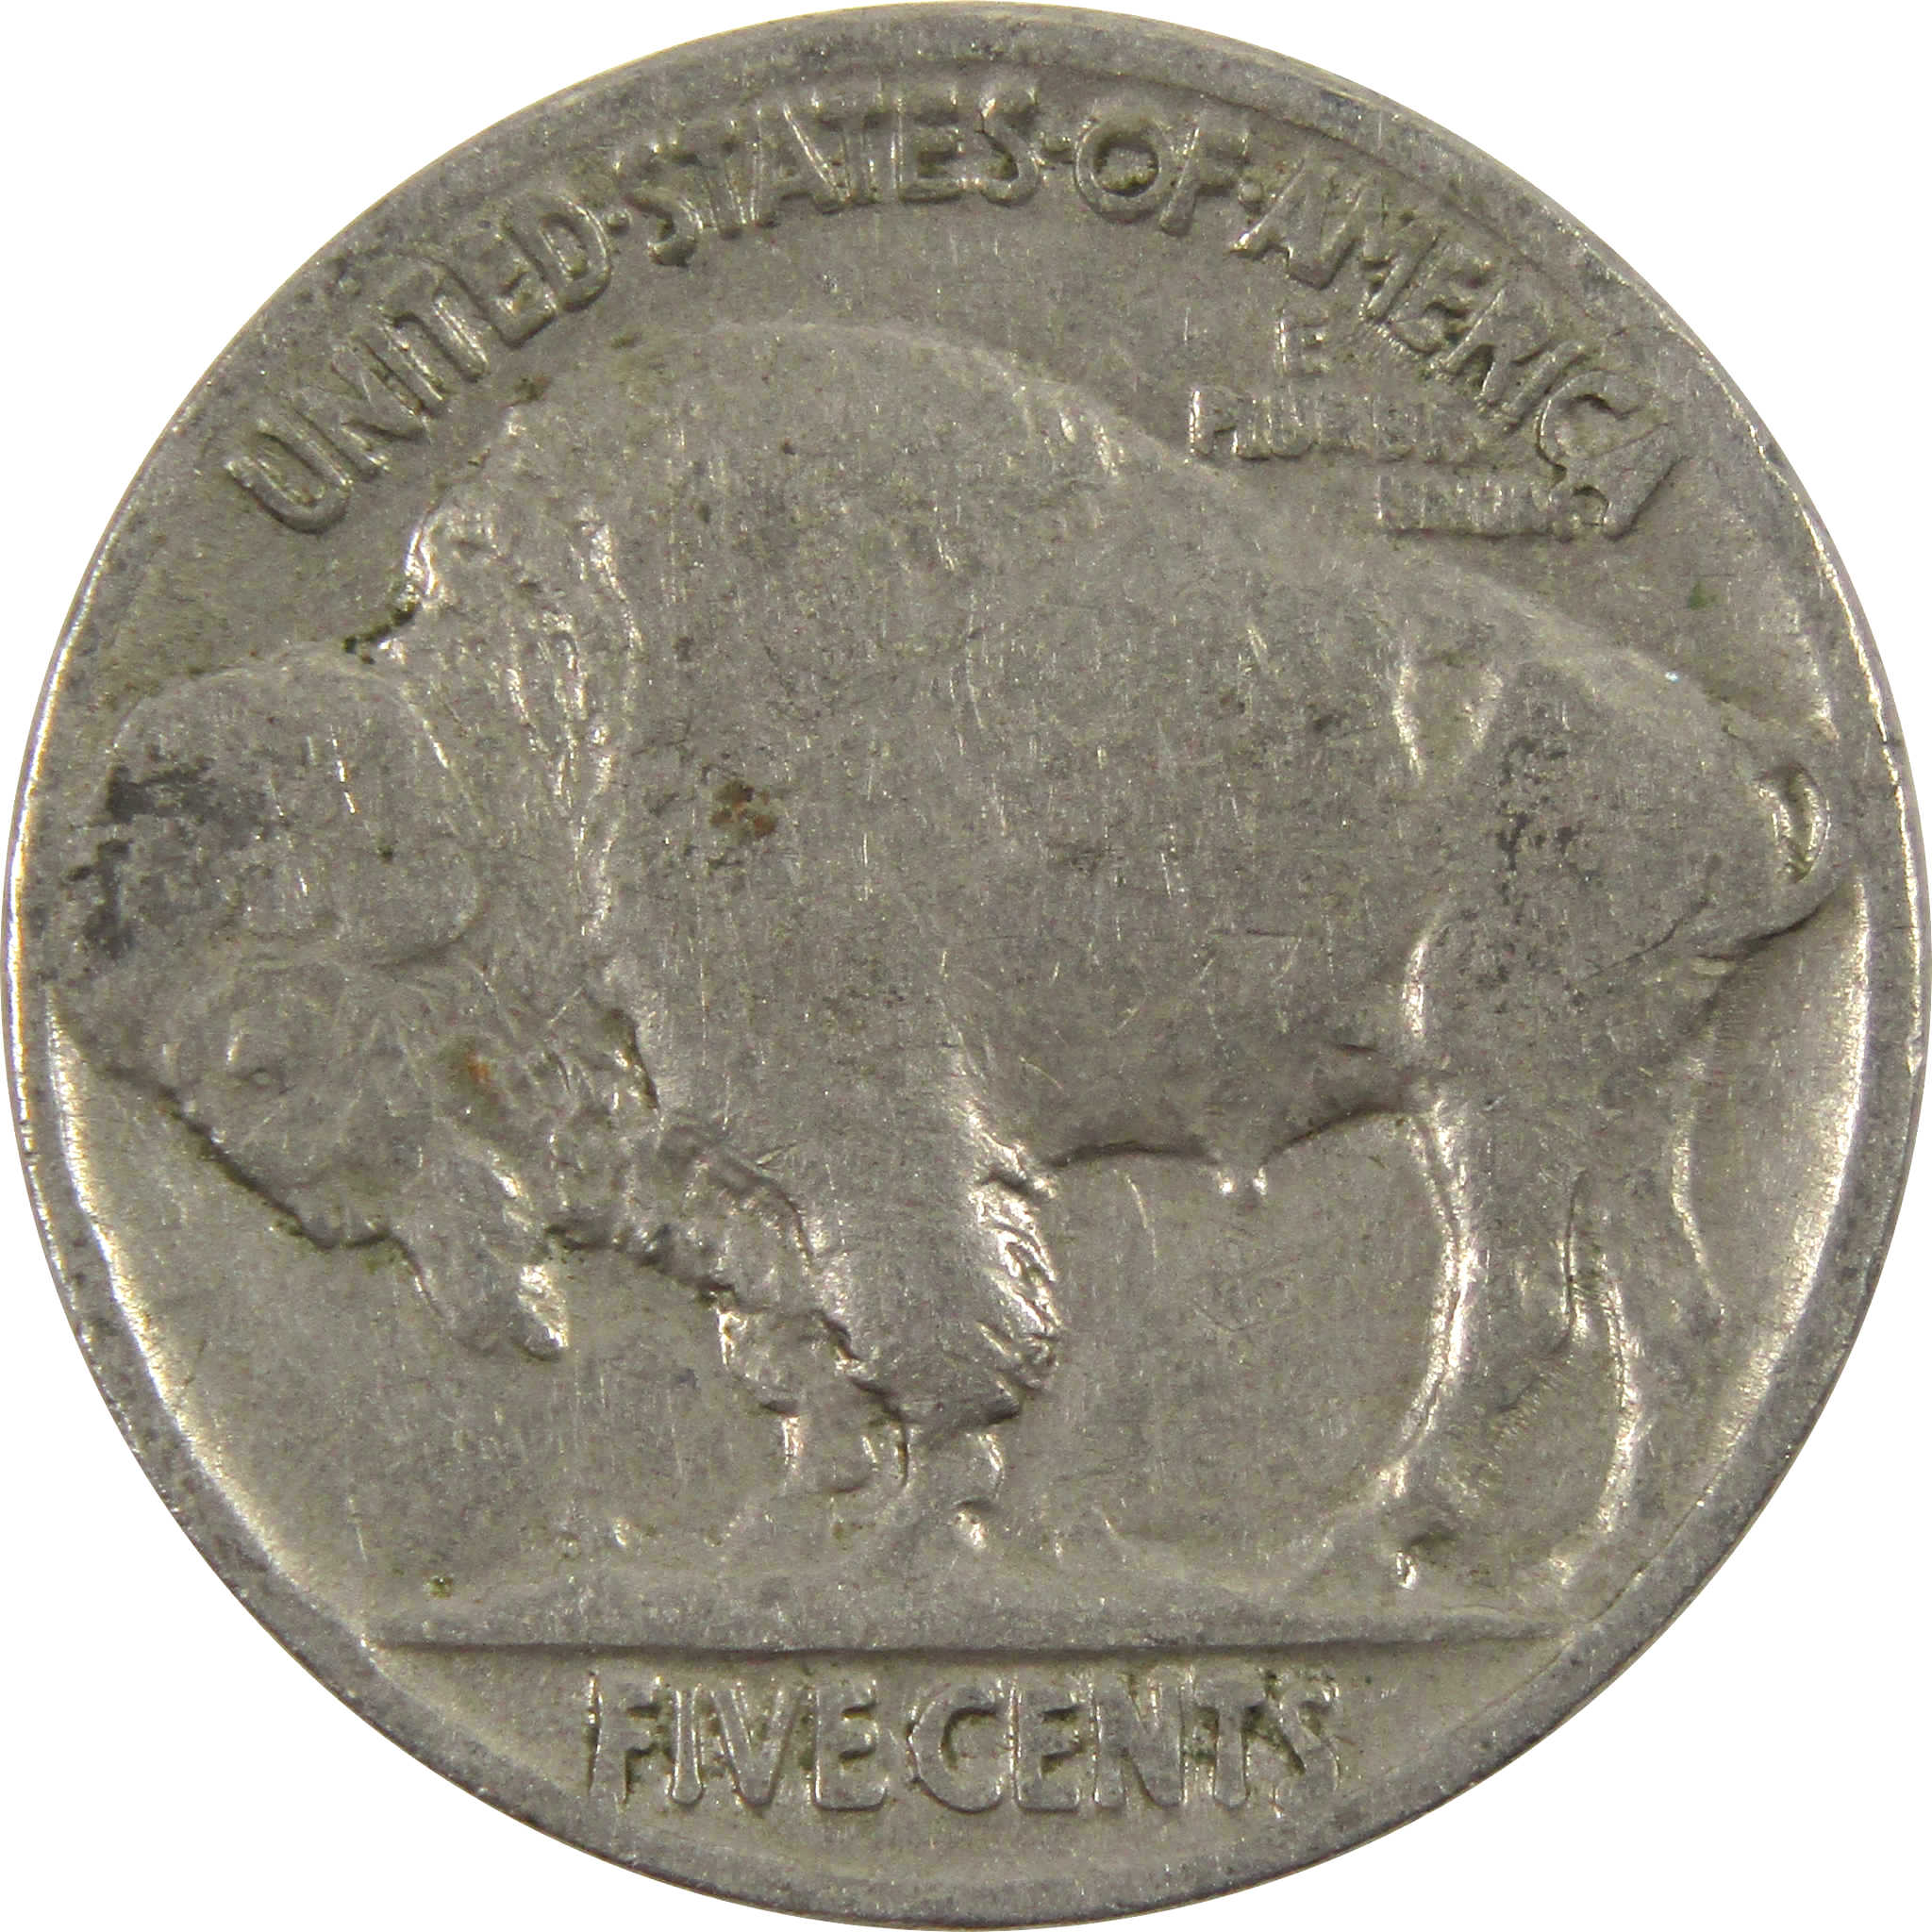 1934 Indian Head Buffalo Nickel AG About Good 5c Coin